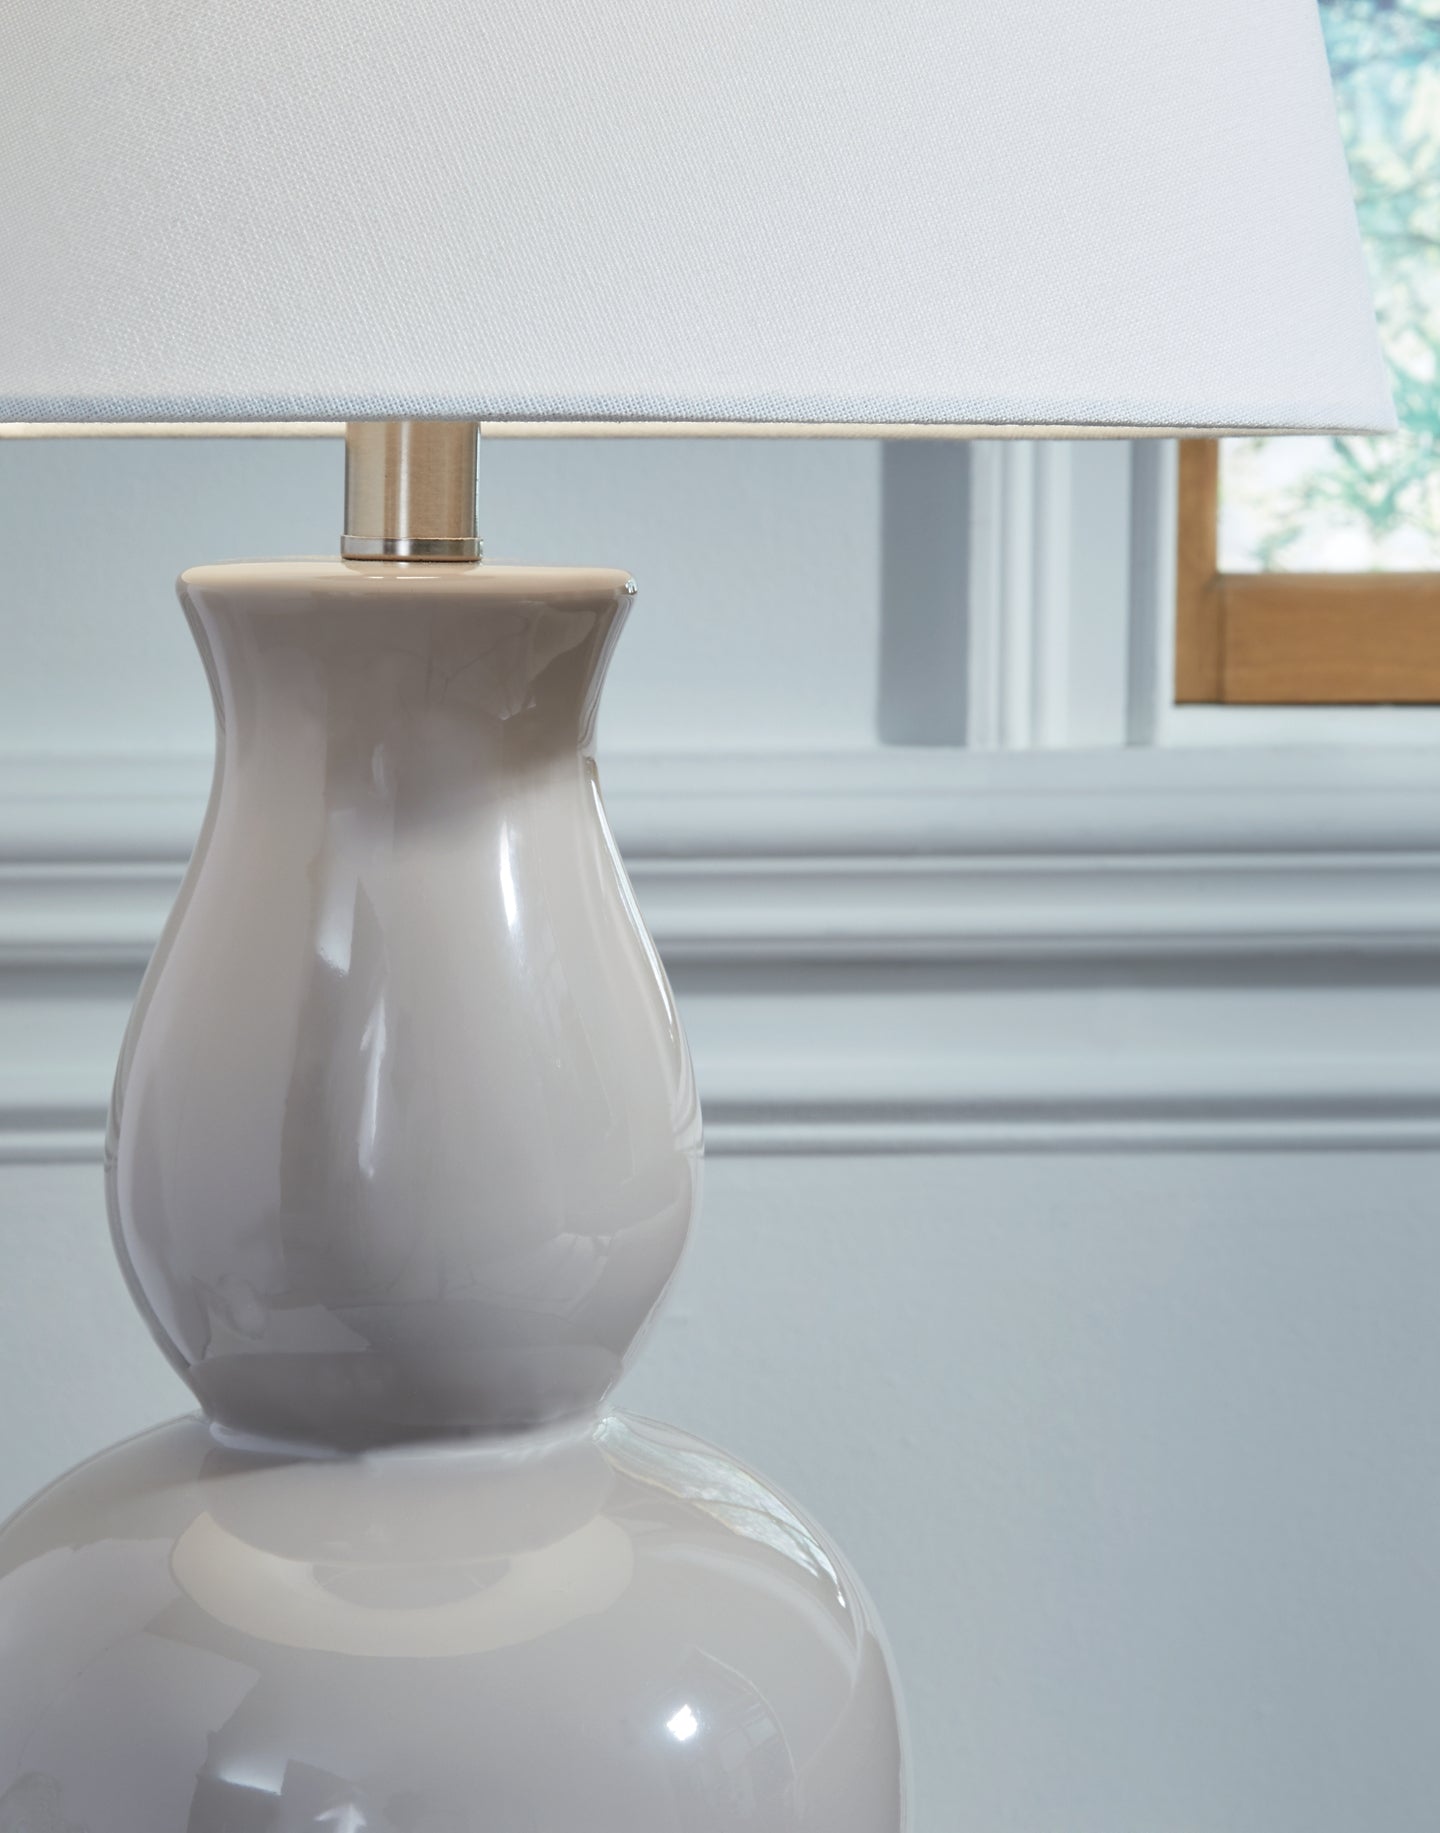 Zellrock Ceramic Table Lamp (1/CN)